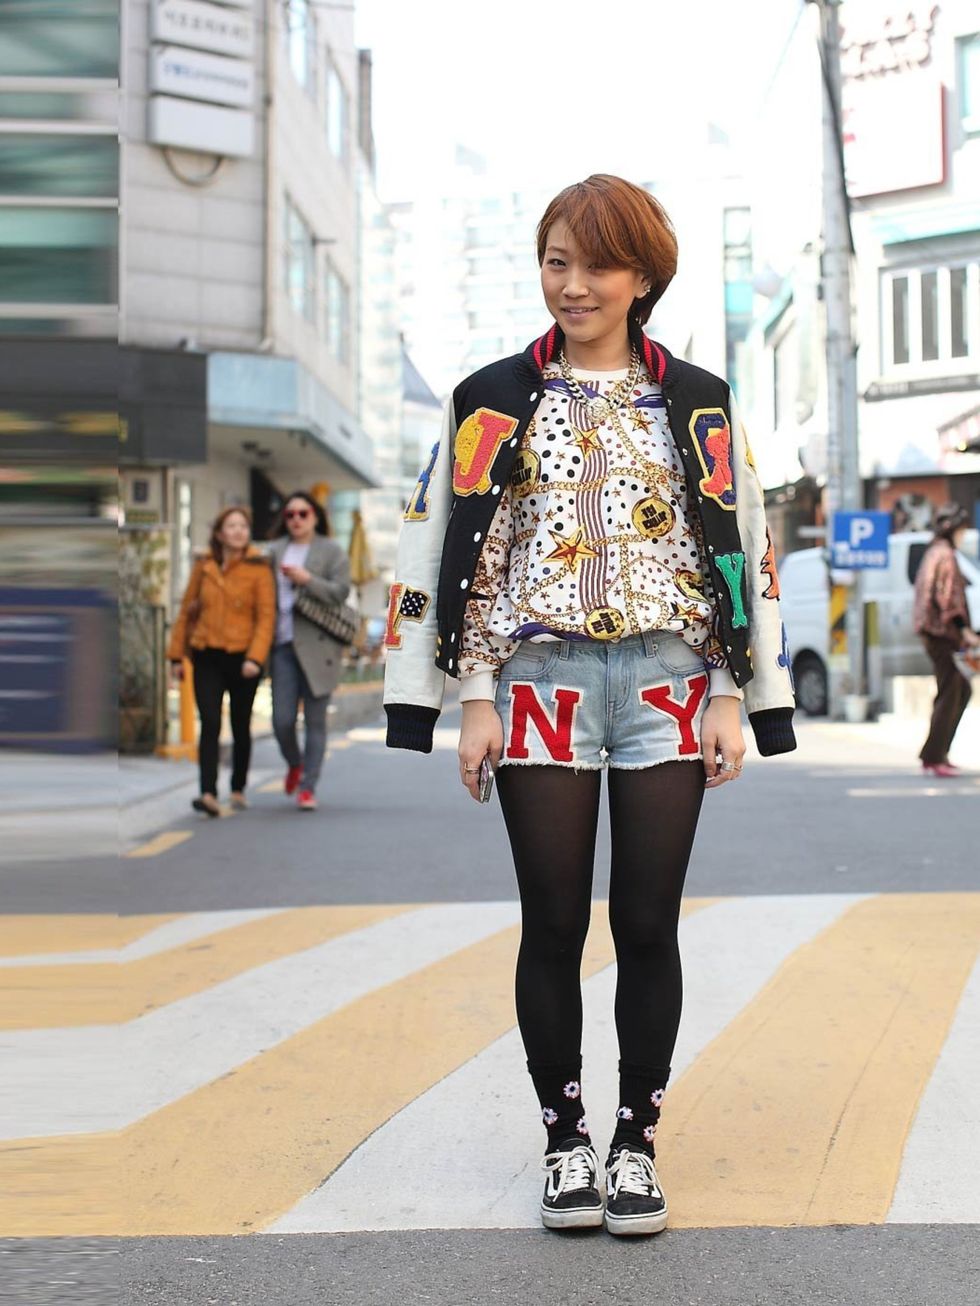 <p>Effy wears Joyrich top, shorts &amp; jacket with Vans trainers.</p><p><em>More street style inspiration:</em></p><p><a href="http://www.elleuk.com/style/street-style/seoul-fashion-week-autumn-winter-2013">Seoul Fashion Week street style</a></p><p><a hr